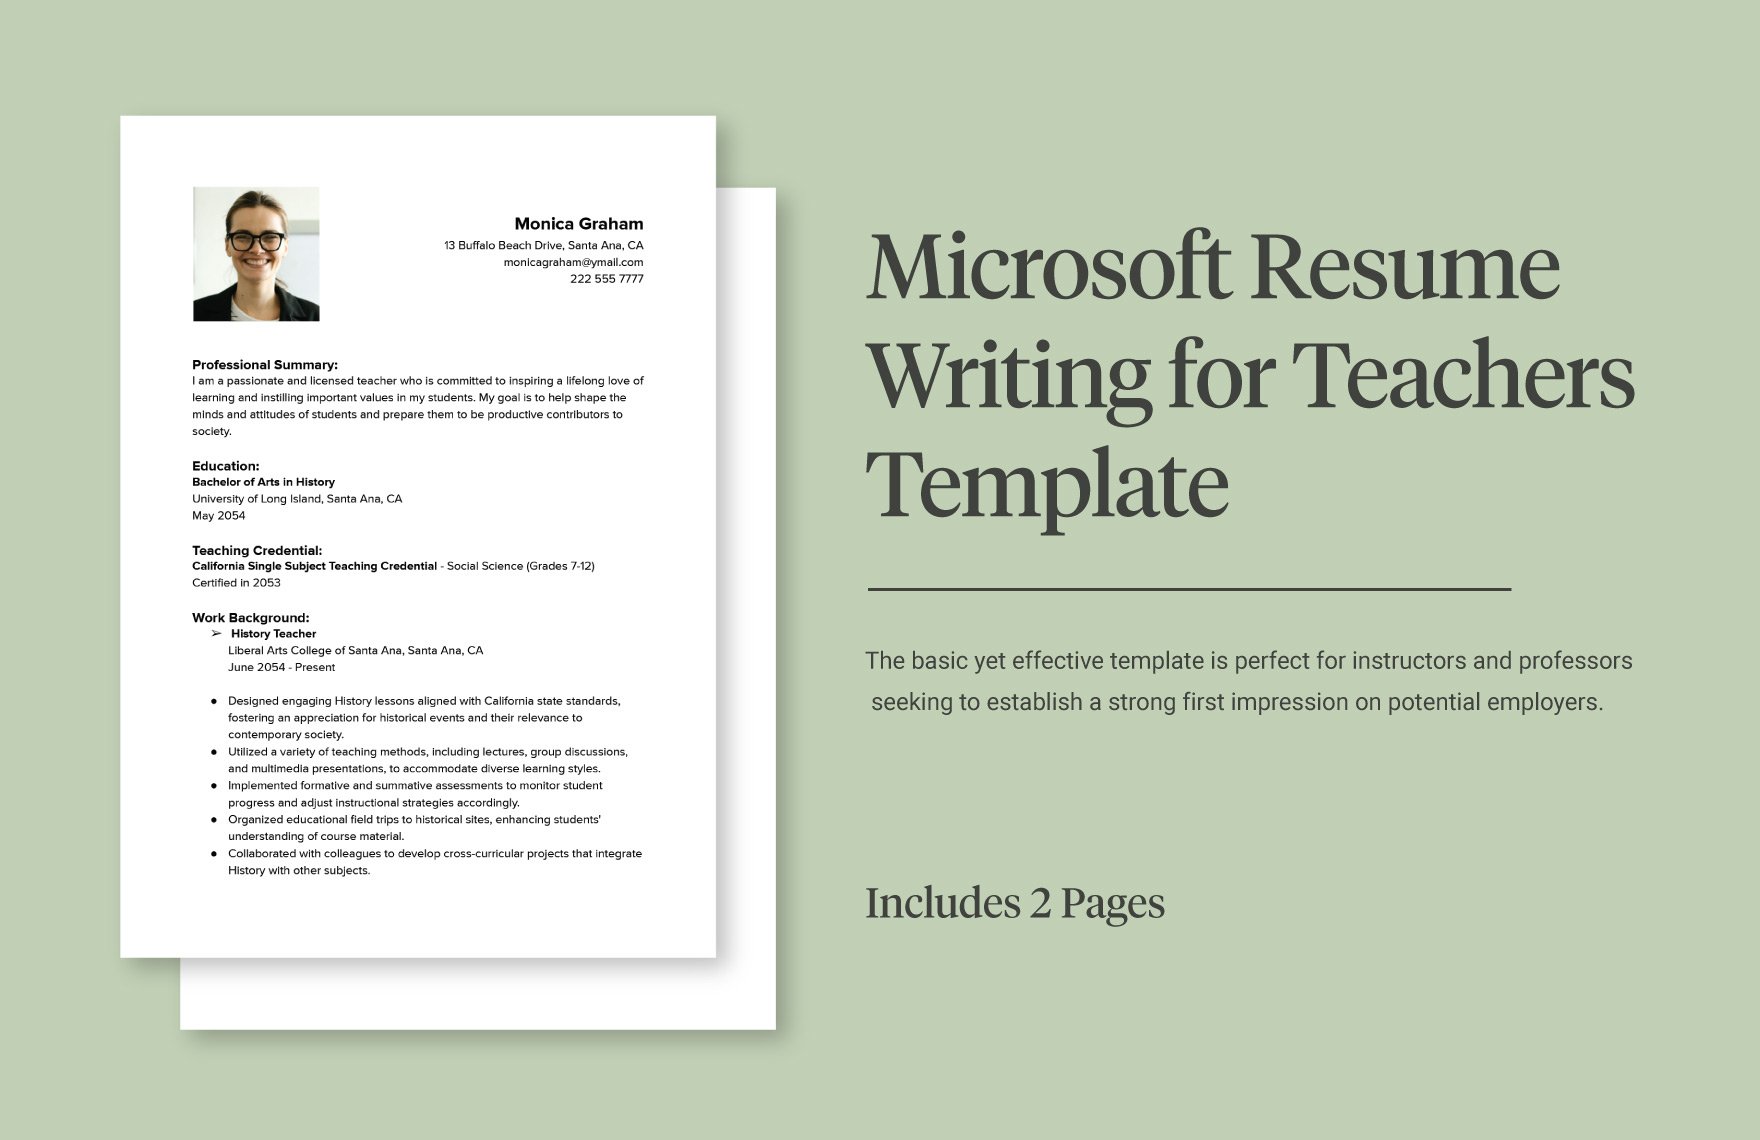 Microsoft Resume Writing for Teachers Template